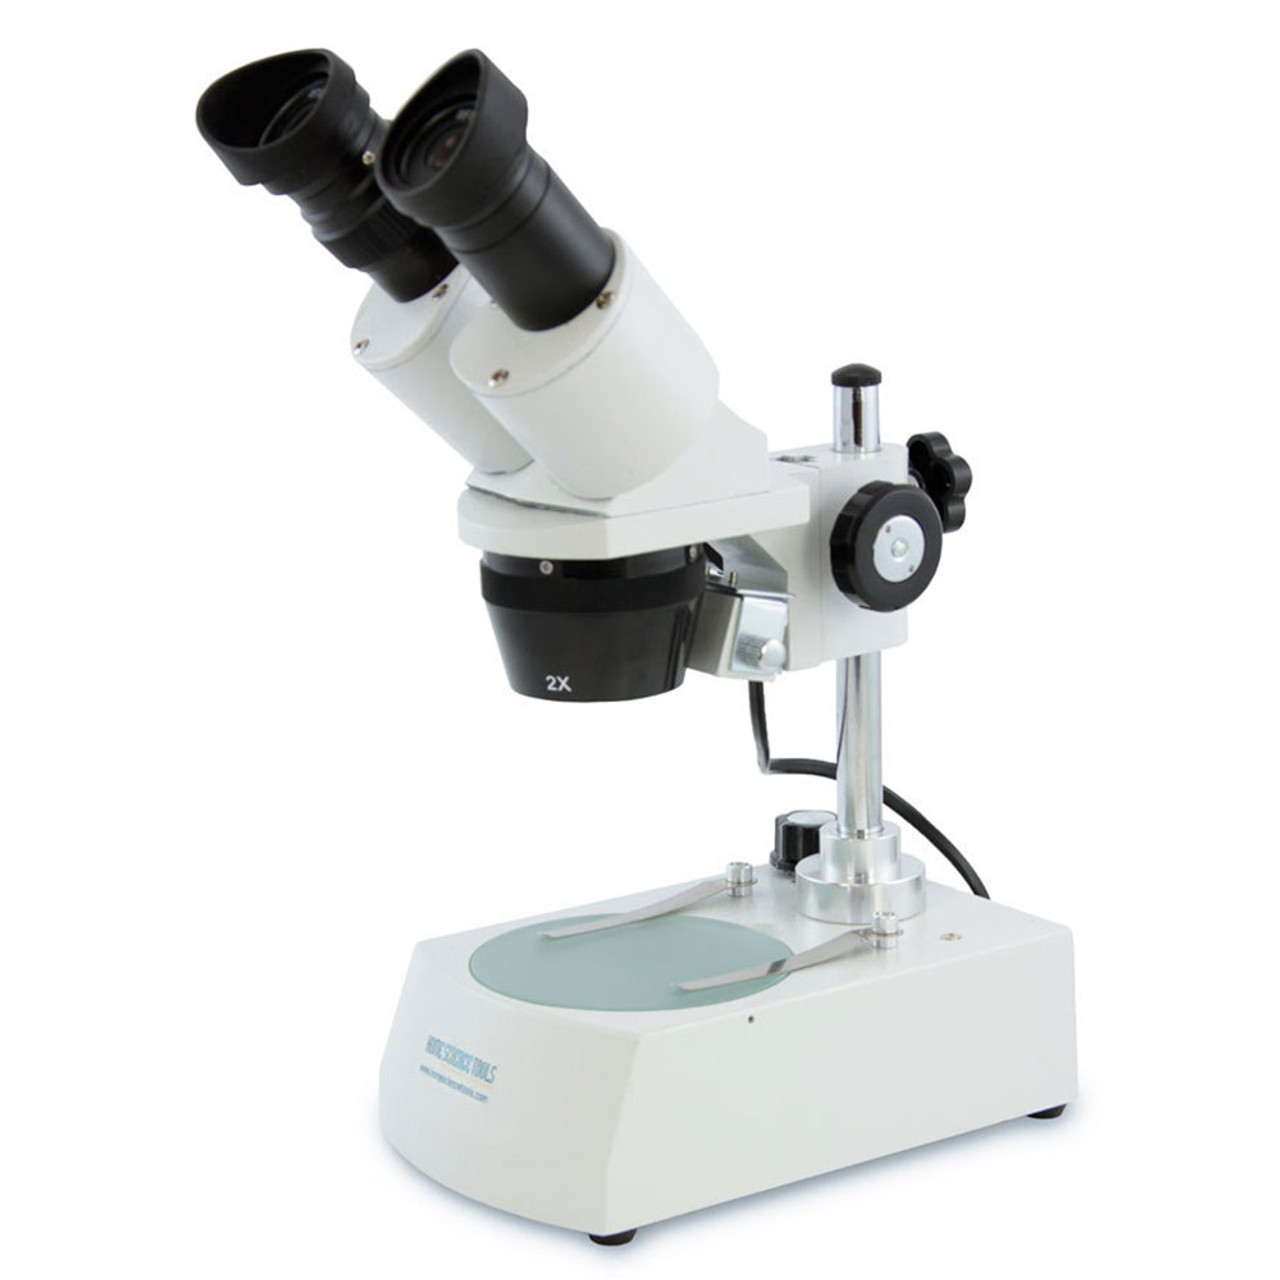 microscope gift guide - stereo microscope